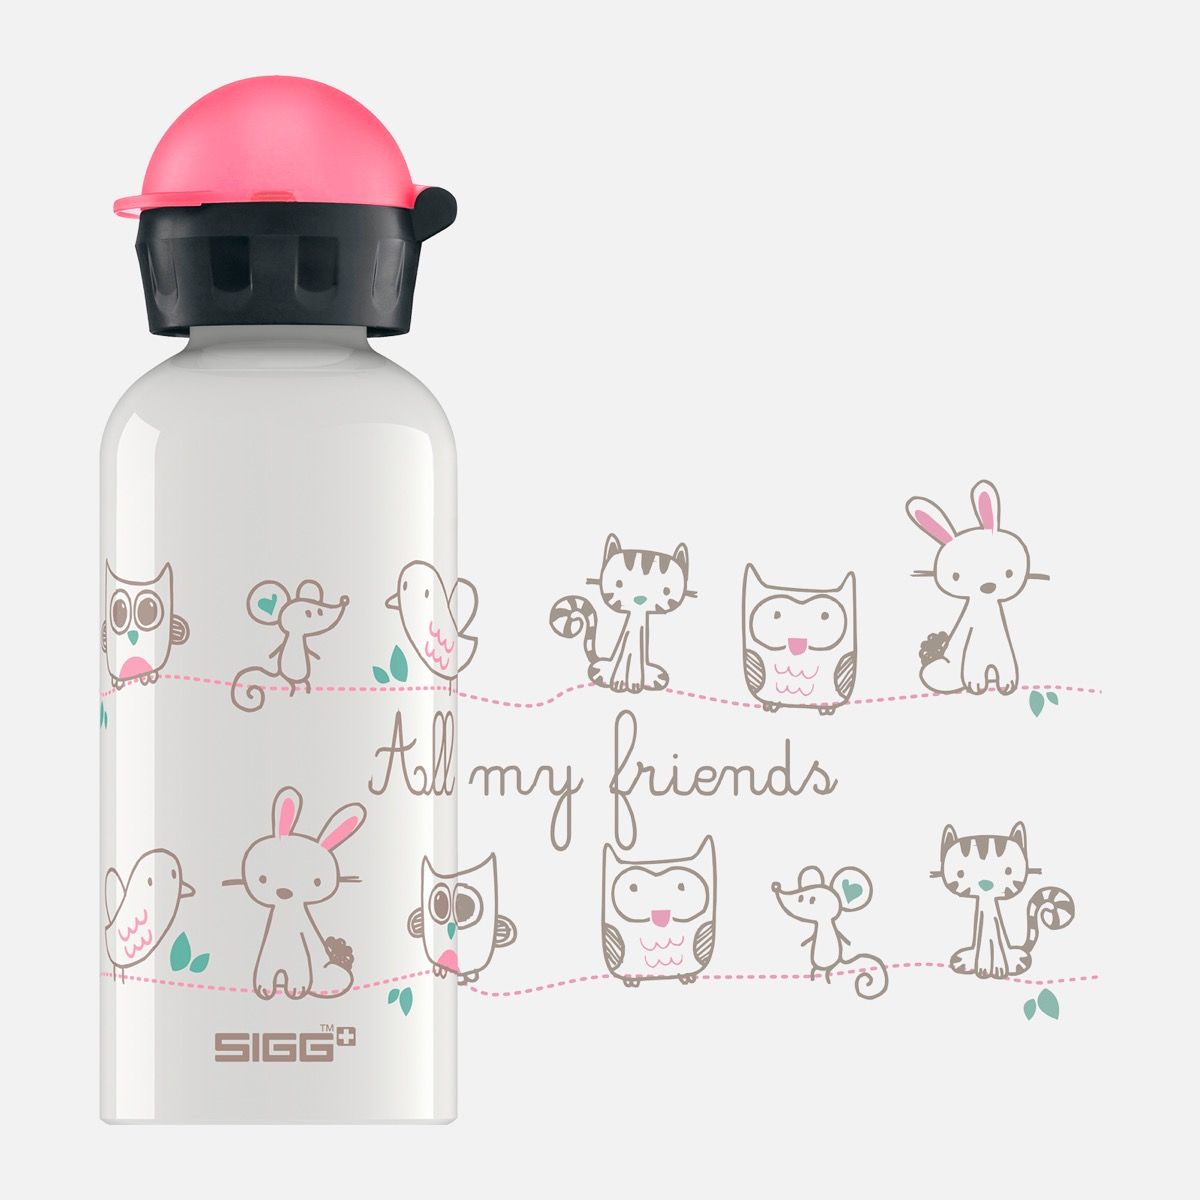 SIGG Kids Water Bottle Glow Heartballoons 0.4l-13oz buy online